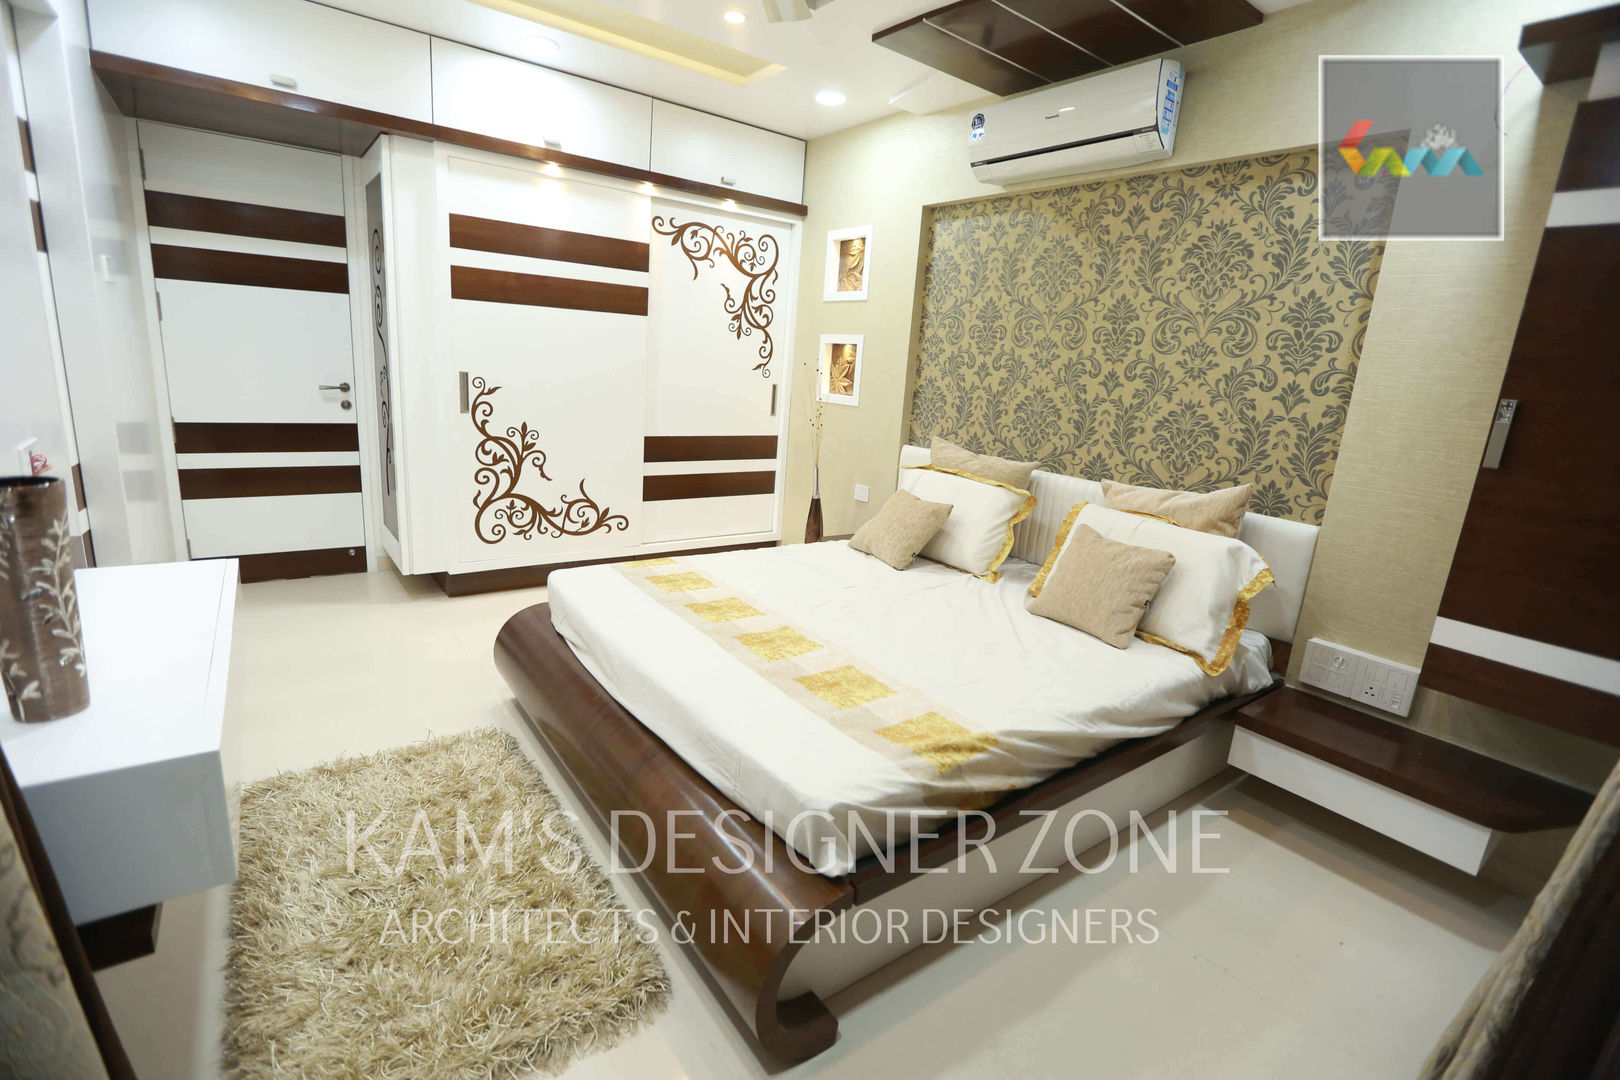 Home interior design for Satish Tayal, KAMS DESIGNER ZONE KAMS DESIGNER ZONE Quartos clássicos